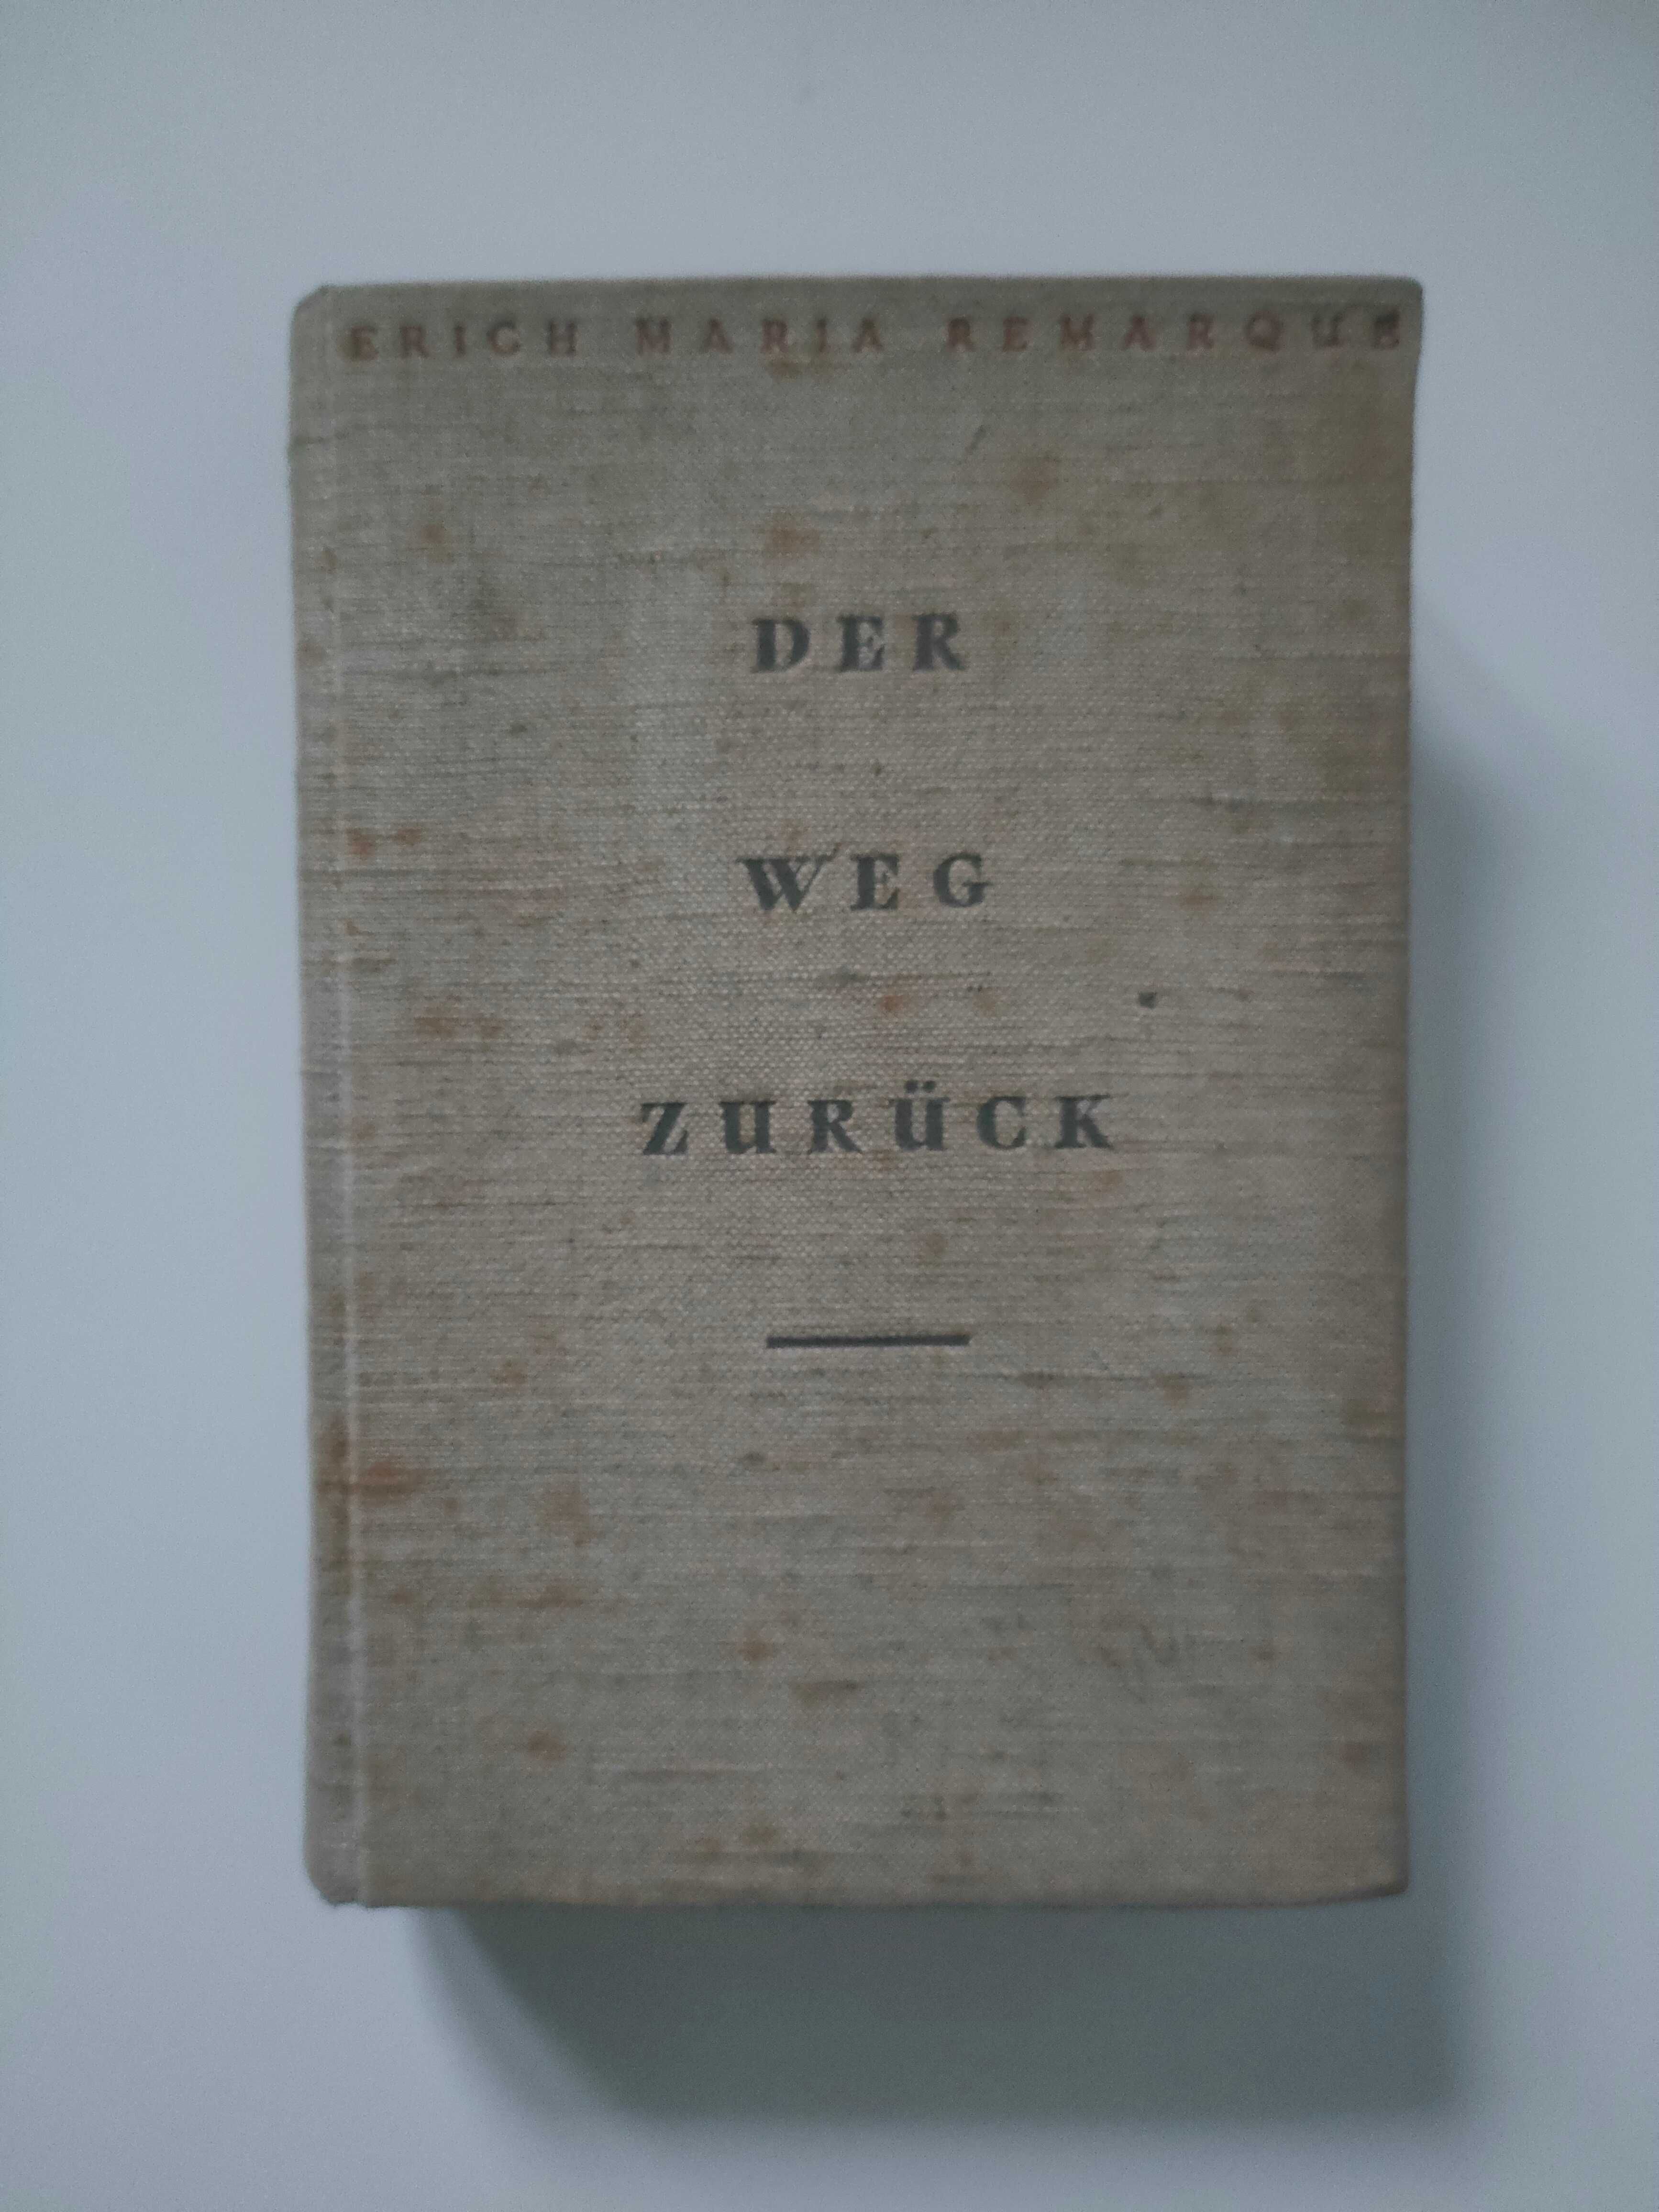 Der Weg Zurück Erich Maria Remarque 1931 Droga powrotna - po niemiecku